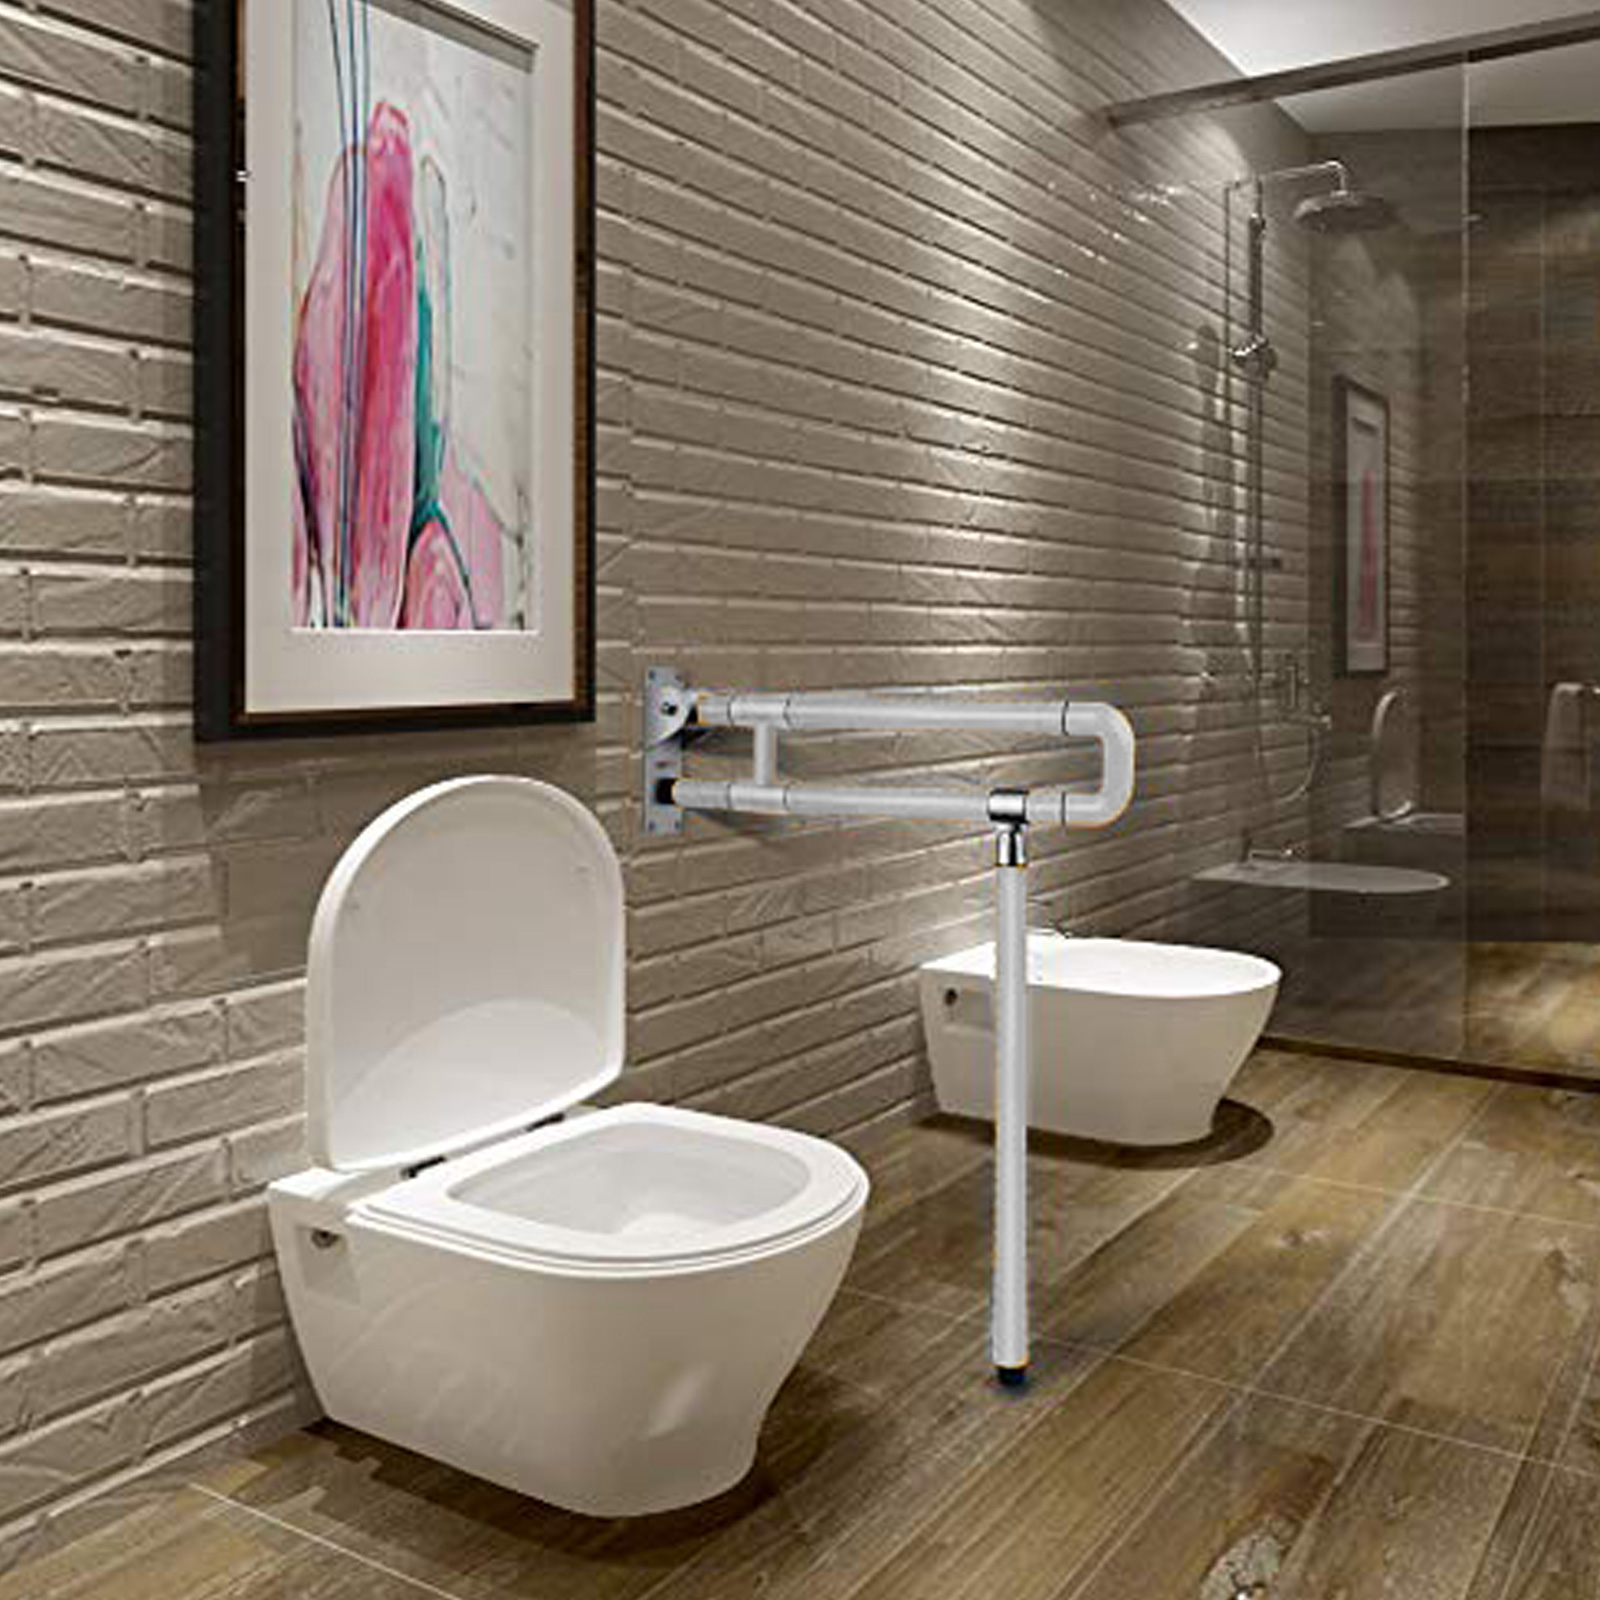 Handicap Bathroom Toilet Bars Image Of Bathroom And Closet